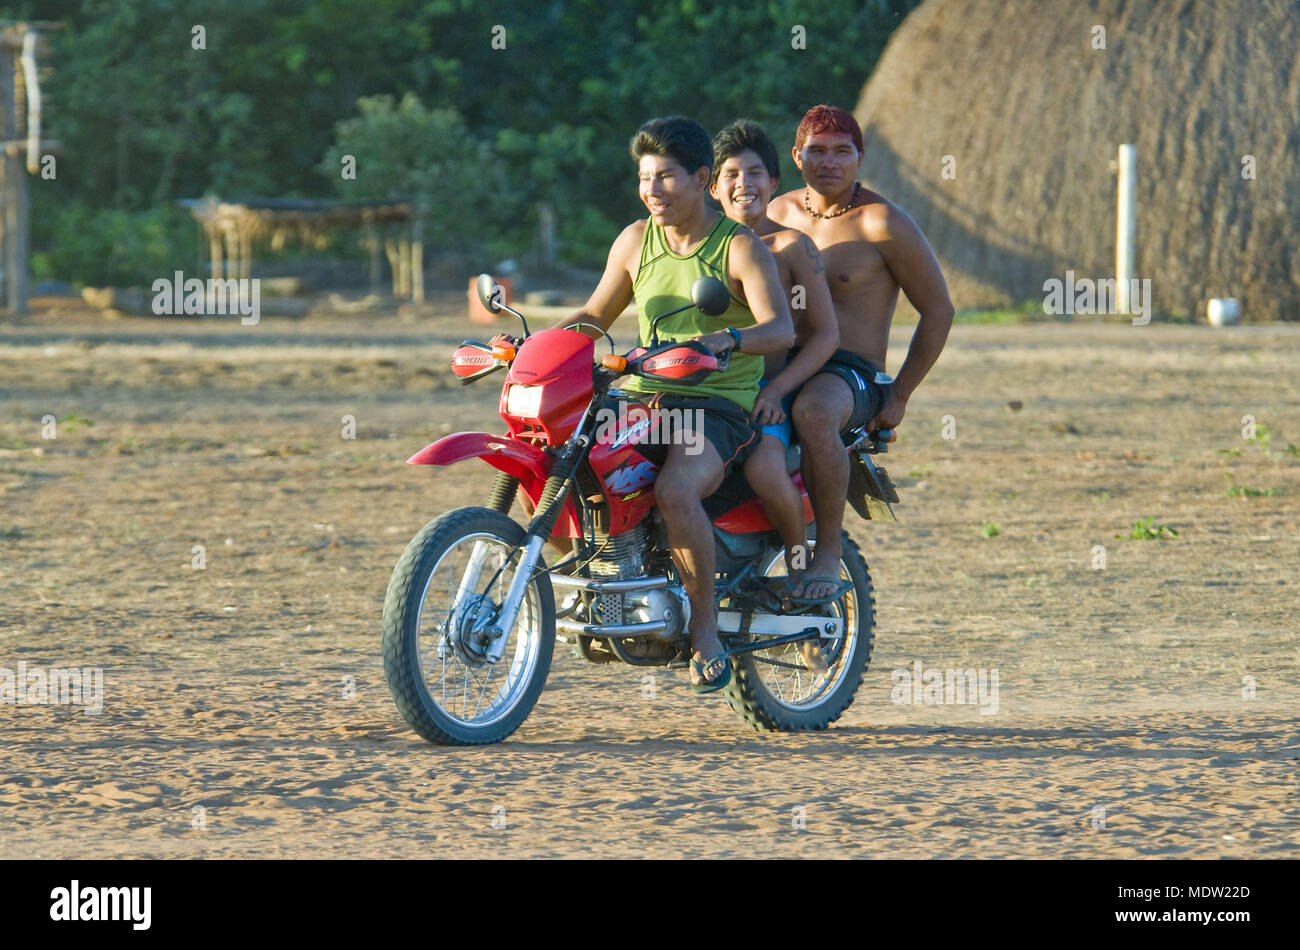 Der motorisierte Verkehr im Dorf Aiha - Kalapalo Ethnizität - Xingu indigenen Park Stockfoto